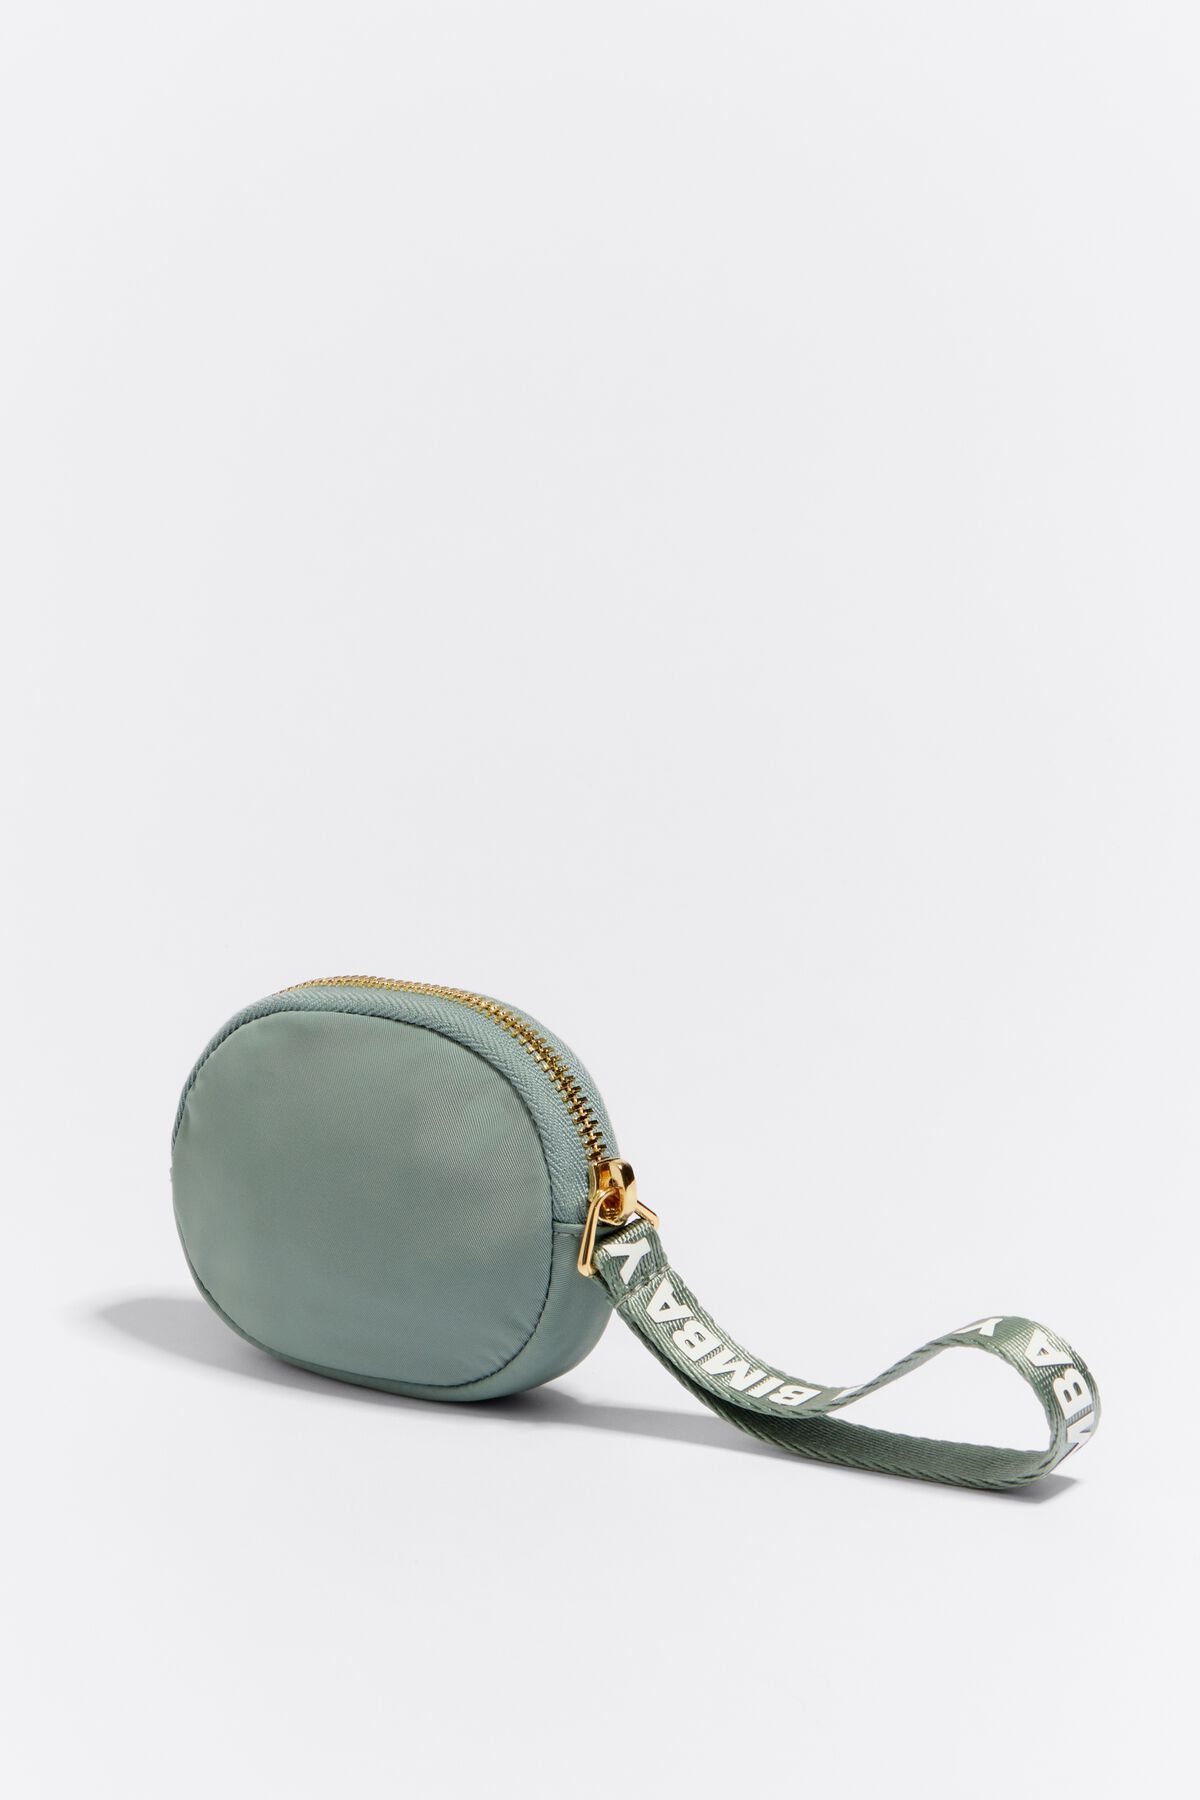 Aquamarine nylon oval coin purse